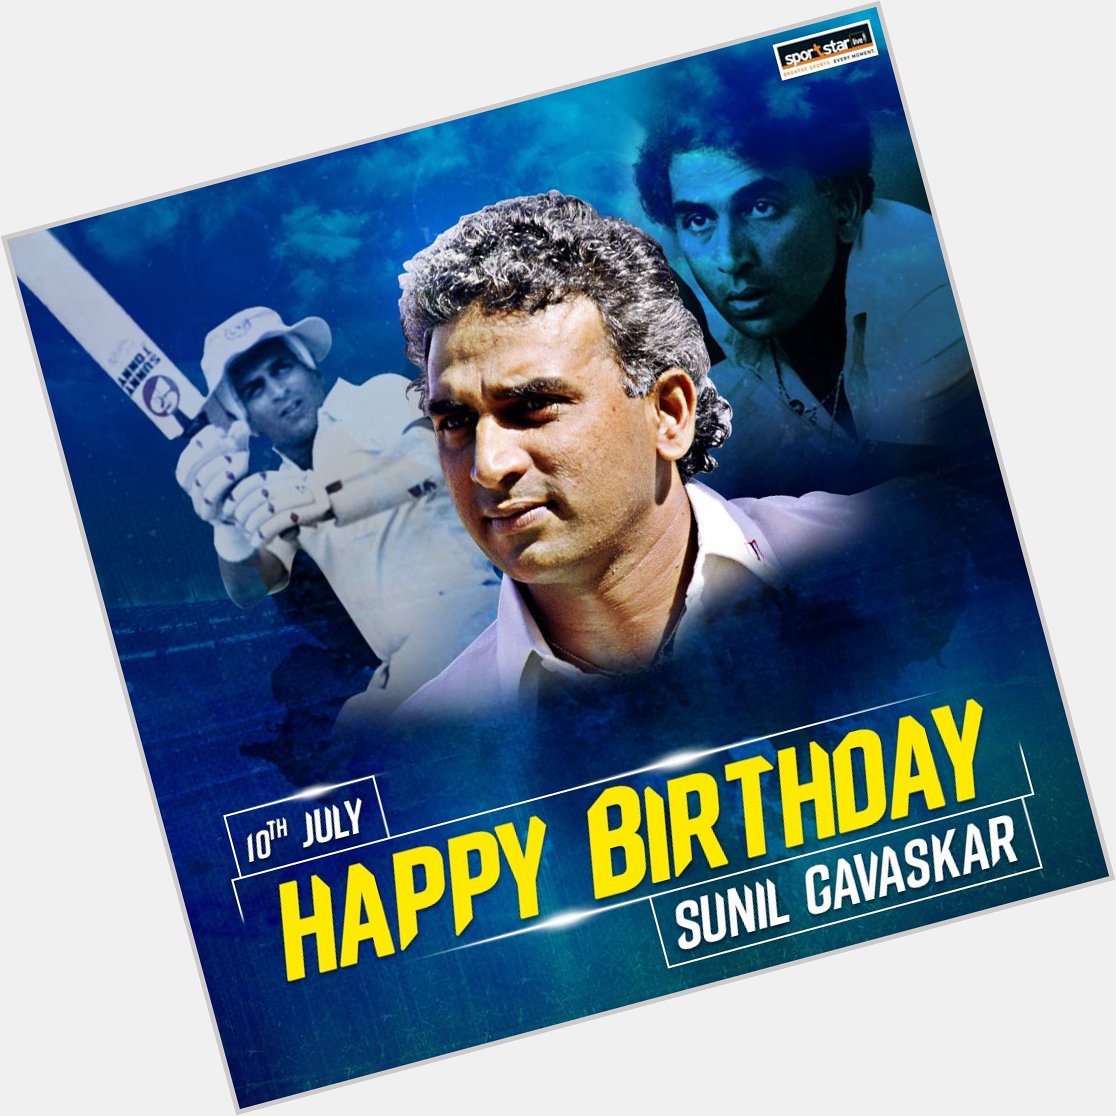 Here\s wishing one of India\s greatest cricketers and Sportstar columnist, Sunil Gavaskar, a very happy birthday. 